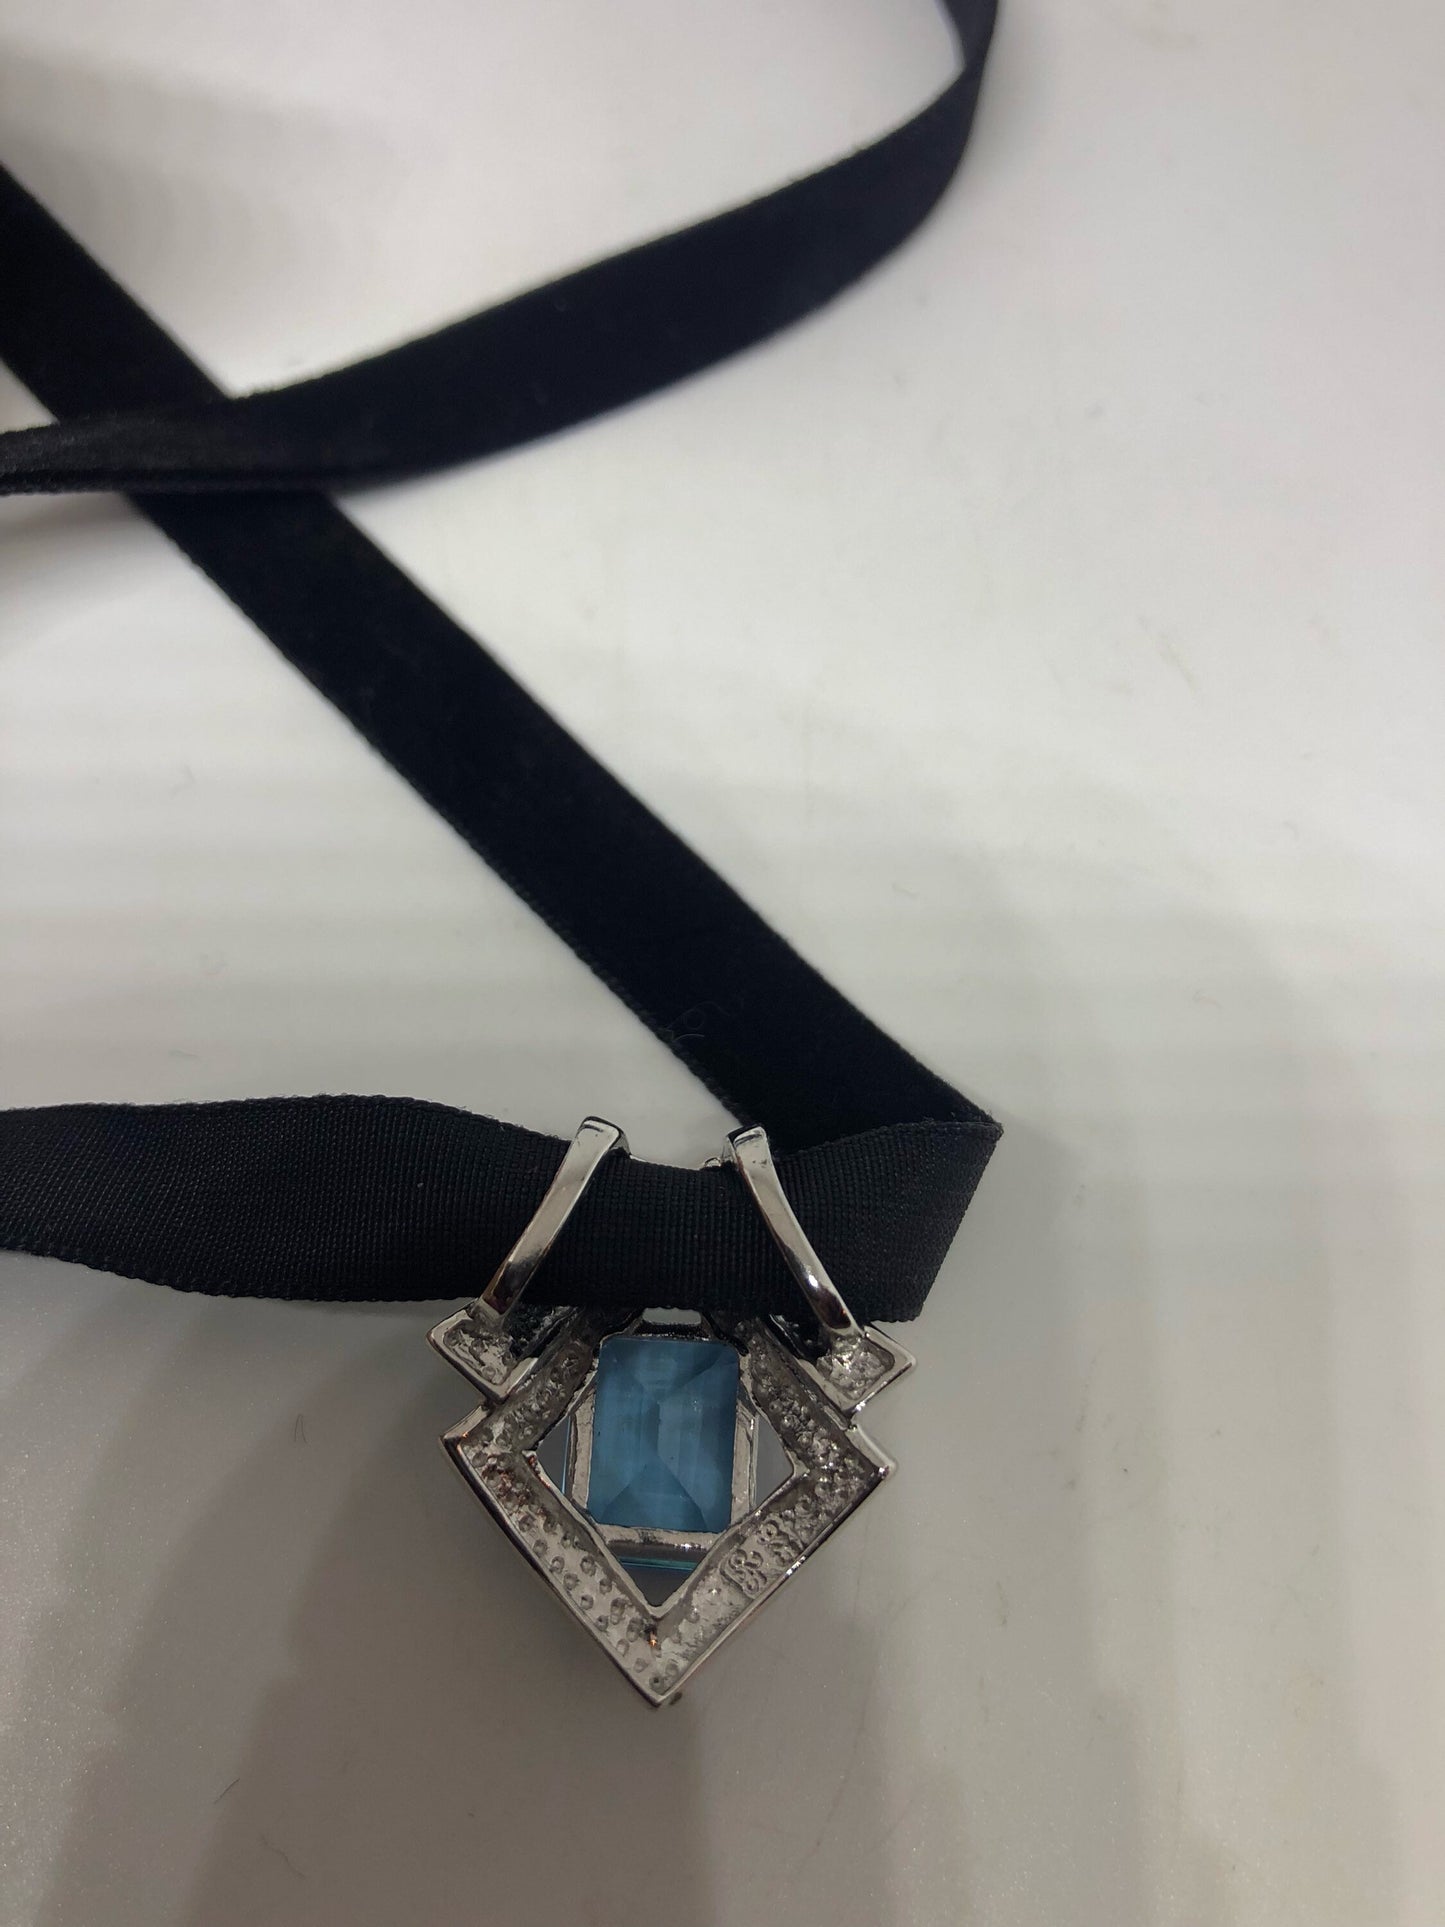 Vintage Blue Topaz Choker 925 Sterling Silver Necklace Pendant